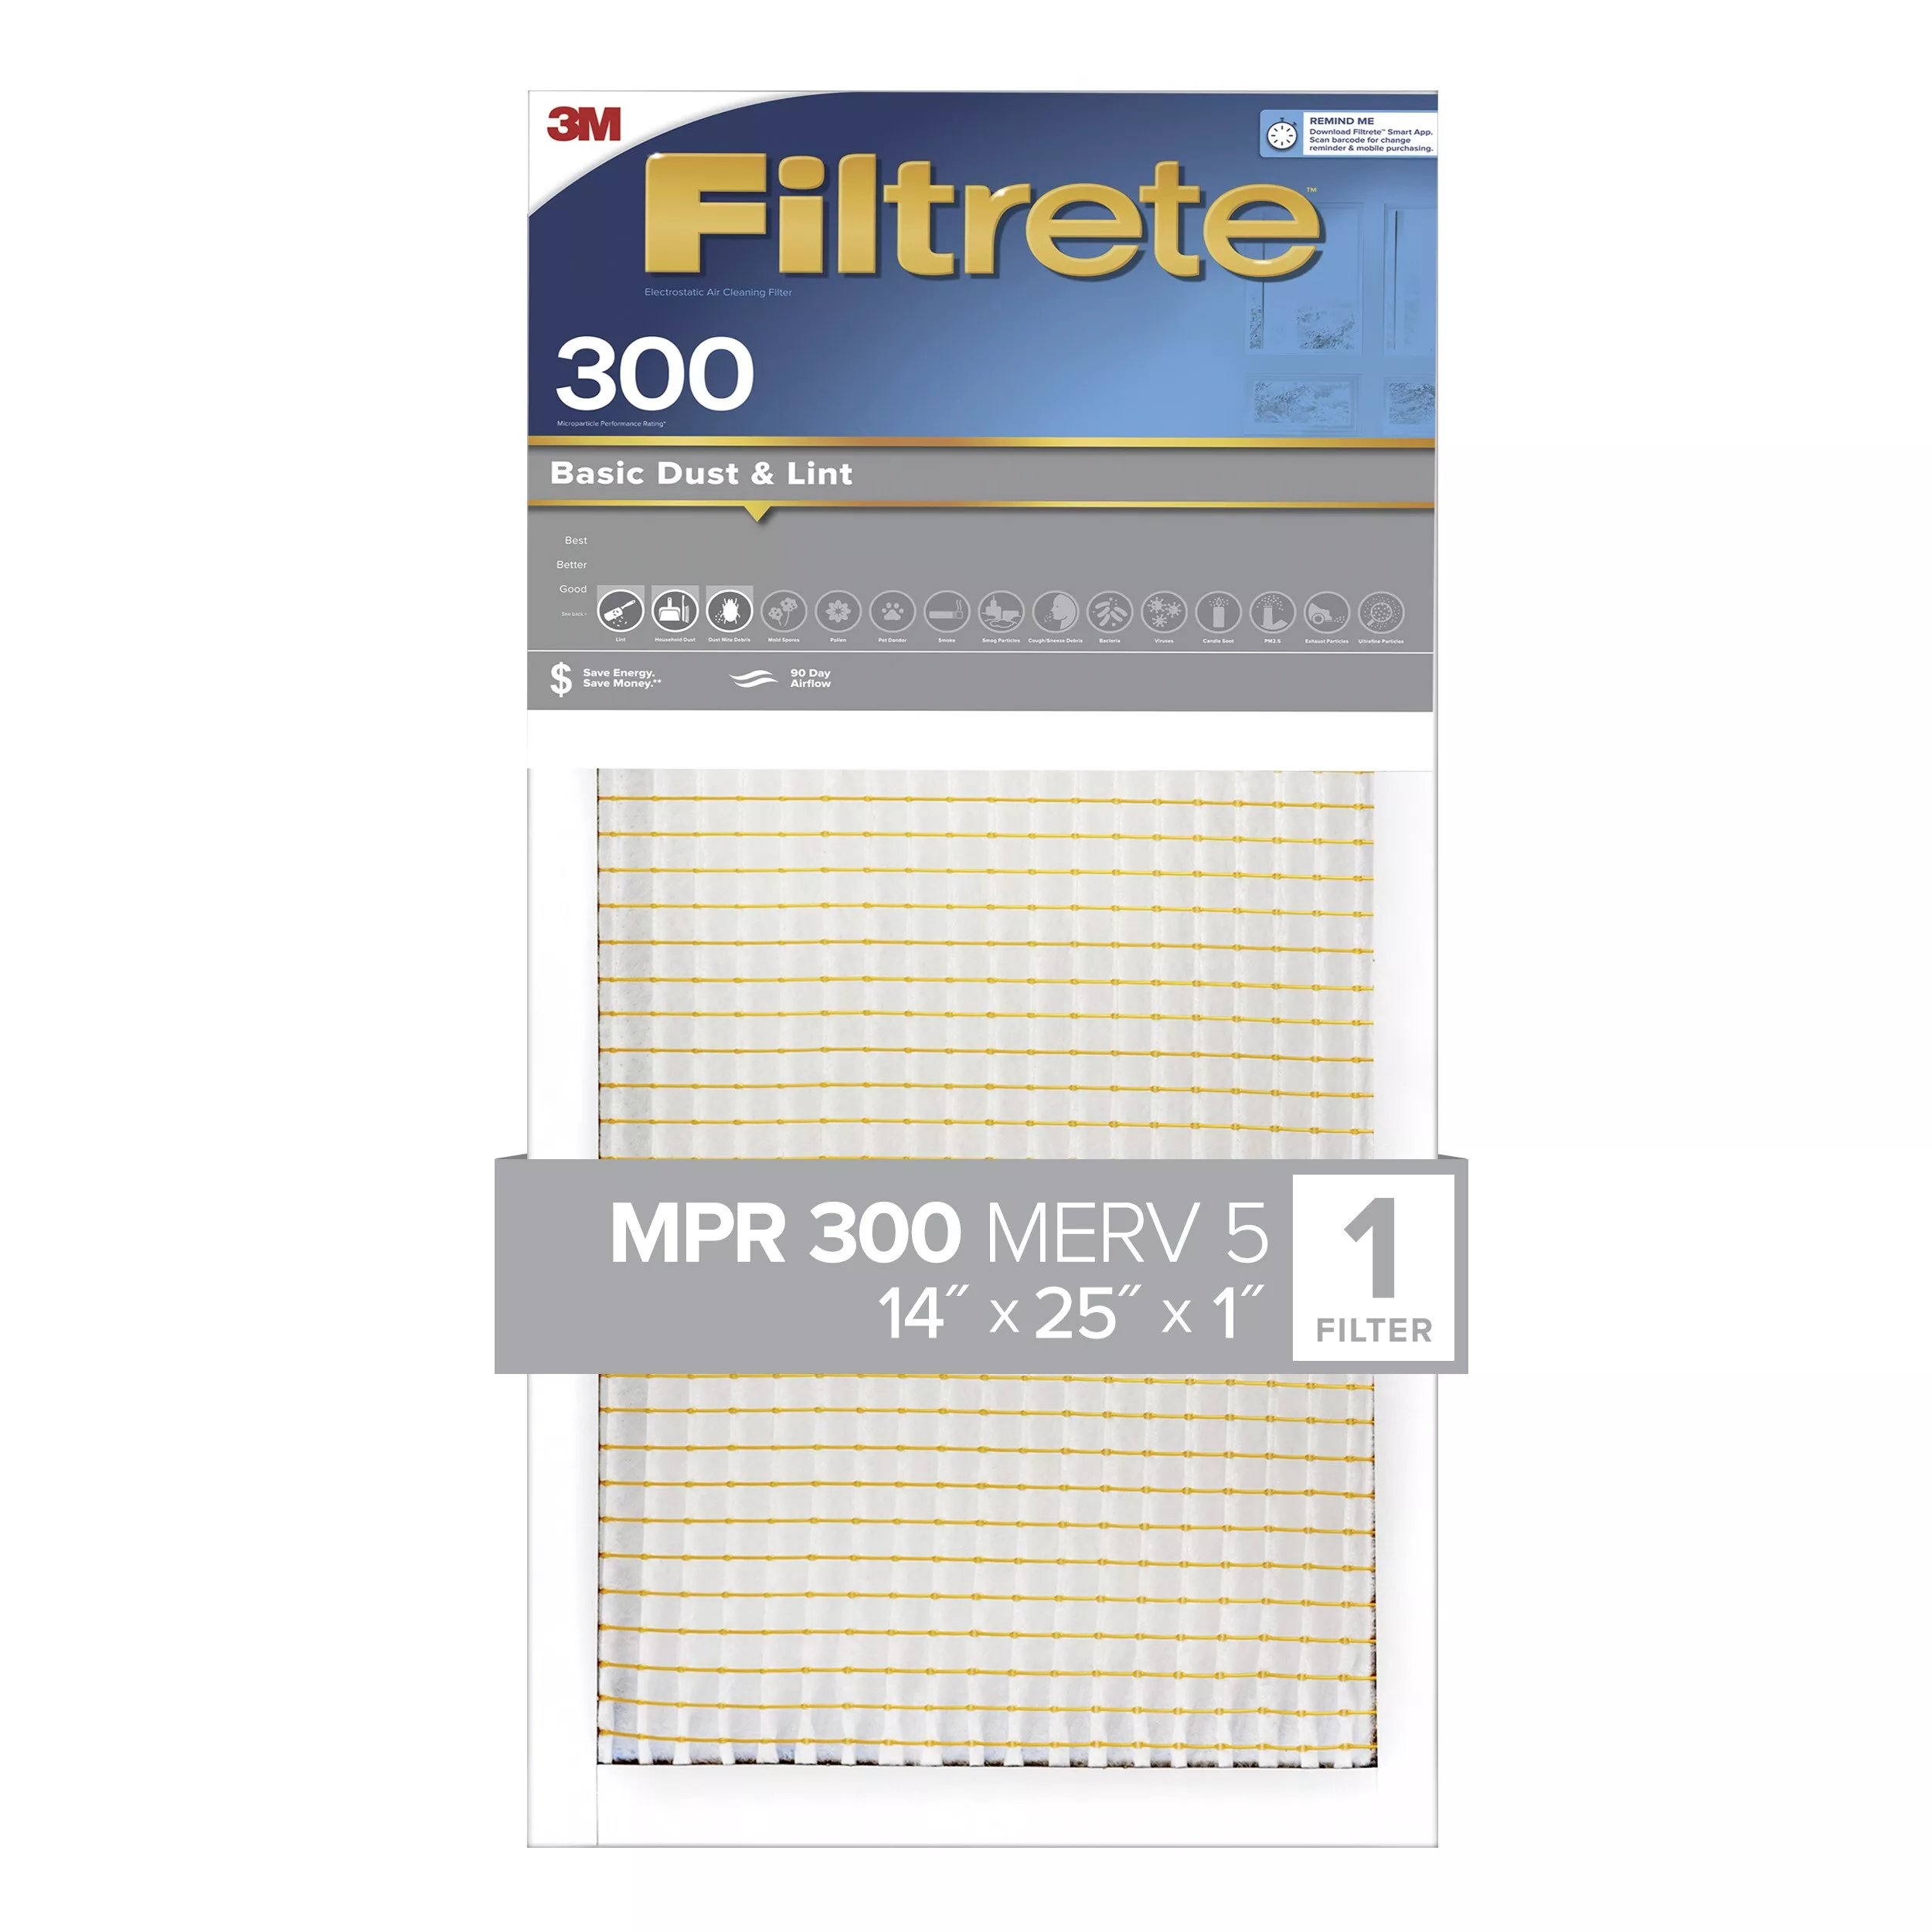 Filtrete™ Basic Dust & Lint Air Filter, 300 MPR, 304-4, 14 in x 25 in x
1 in (35.5 cm x 63.5 cm x 2.5 cm)